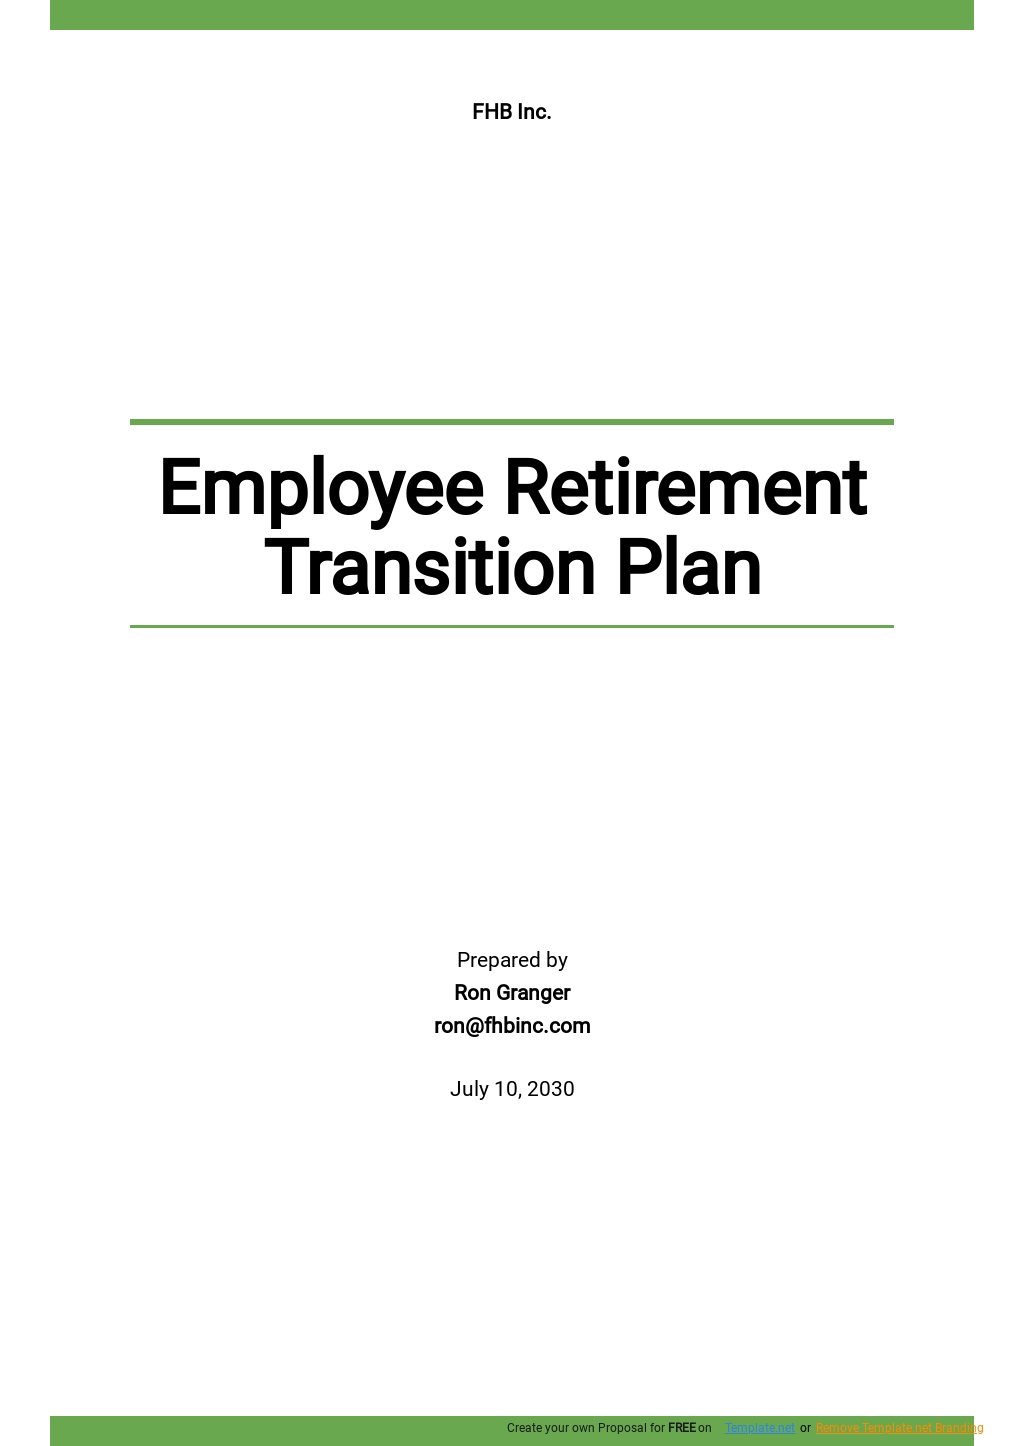 Employee Retirement Transition Plan Template